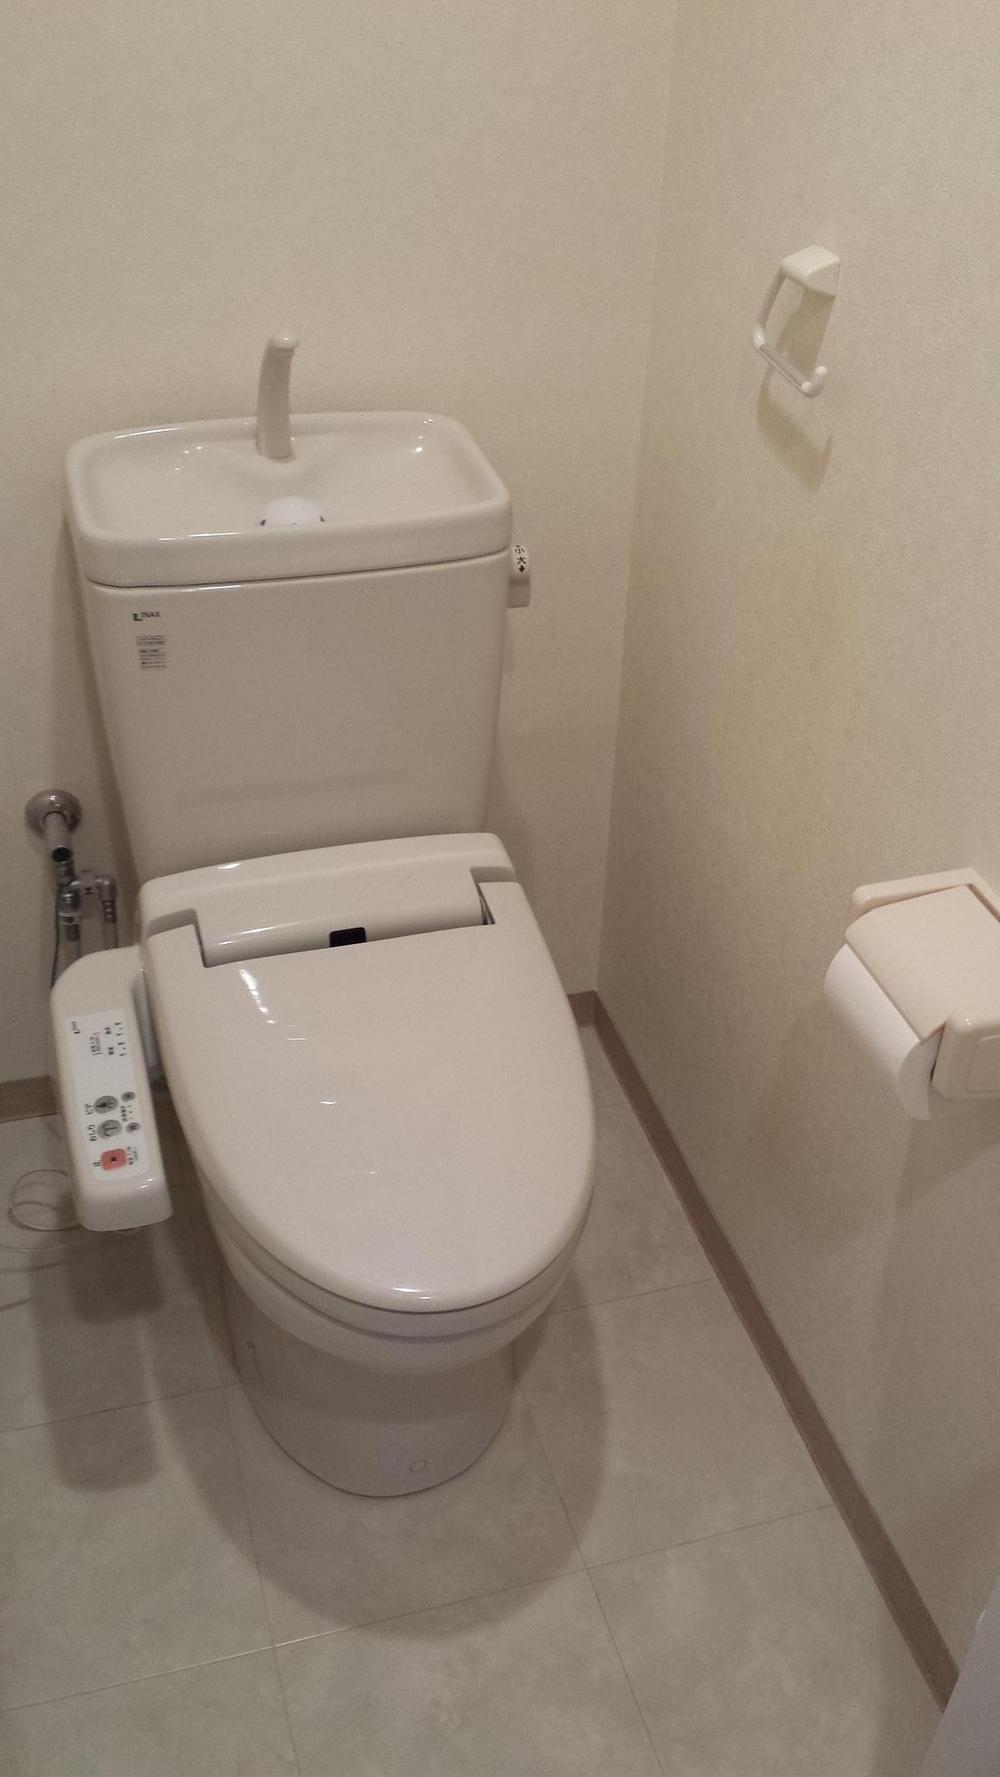 Toilet. Washlet with function